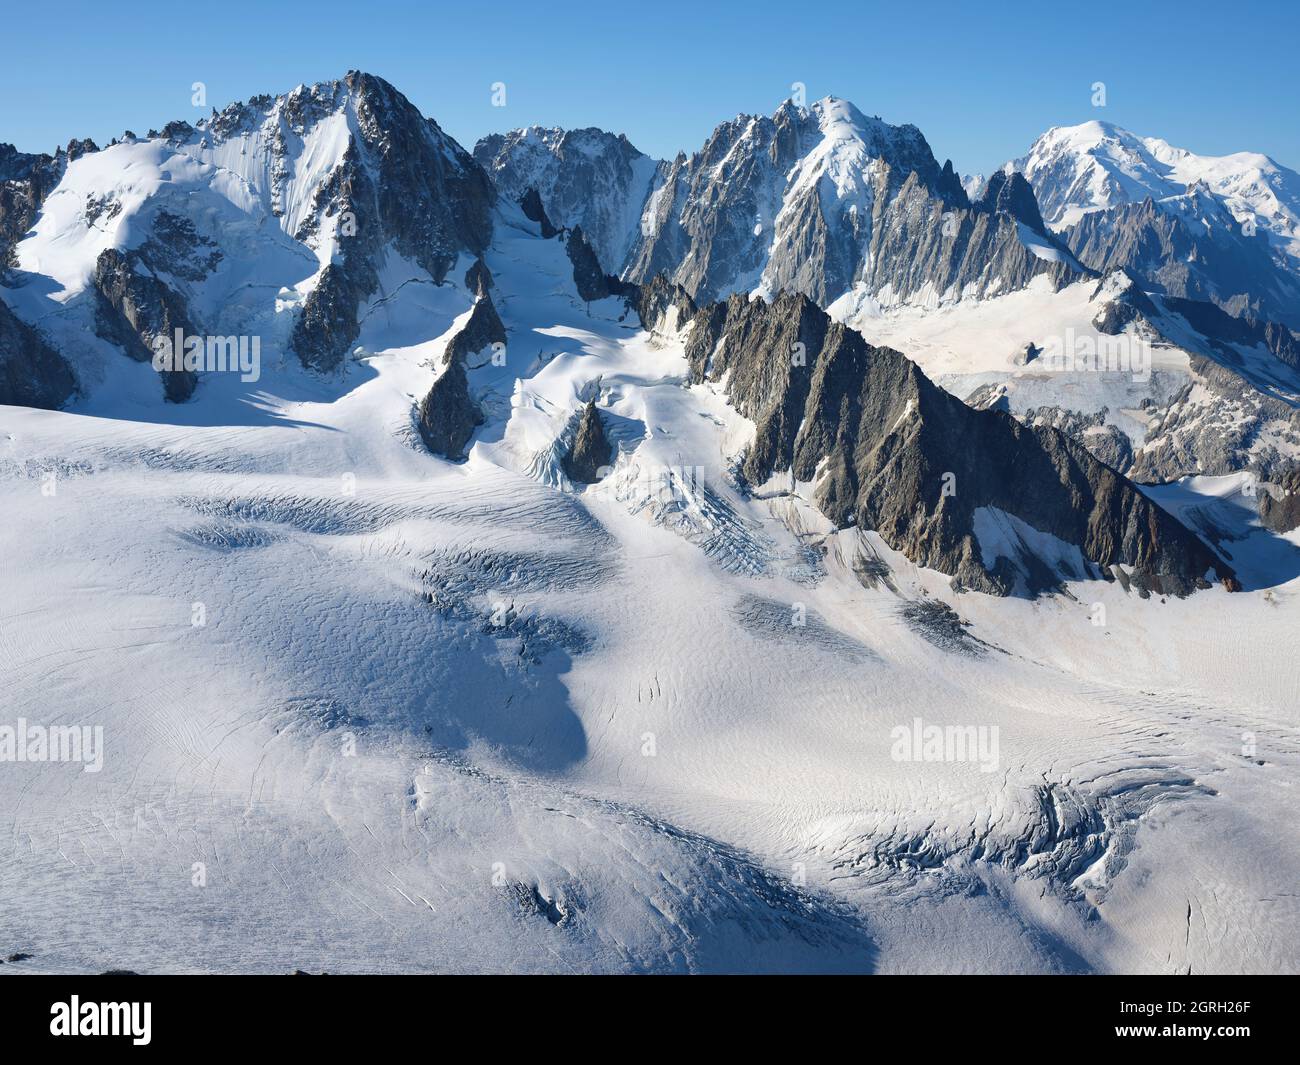 VISTA AEREA. Da sinistra a destra; Aiguille du Chardonnet (3824m), Aiguille Verte (4122m), Monte Bianco (4807m). Chamonix, alta Savoia, Francia. Foto Stock